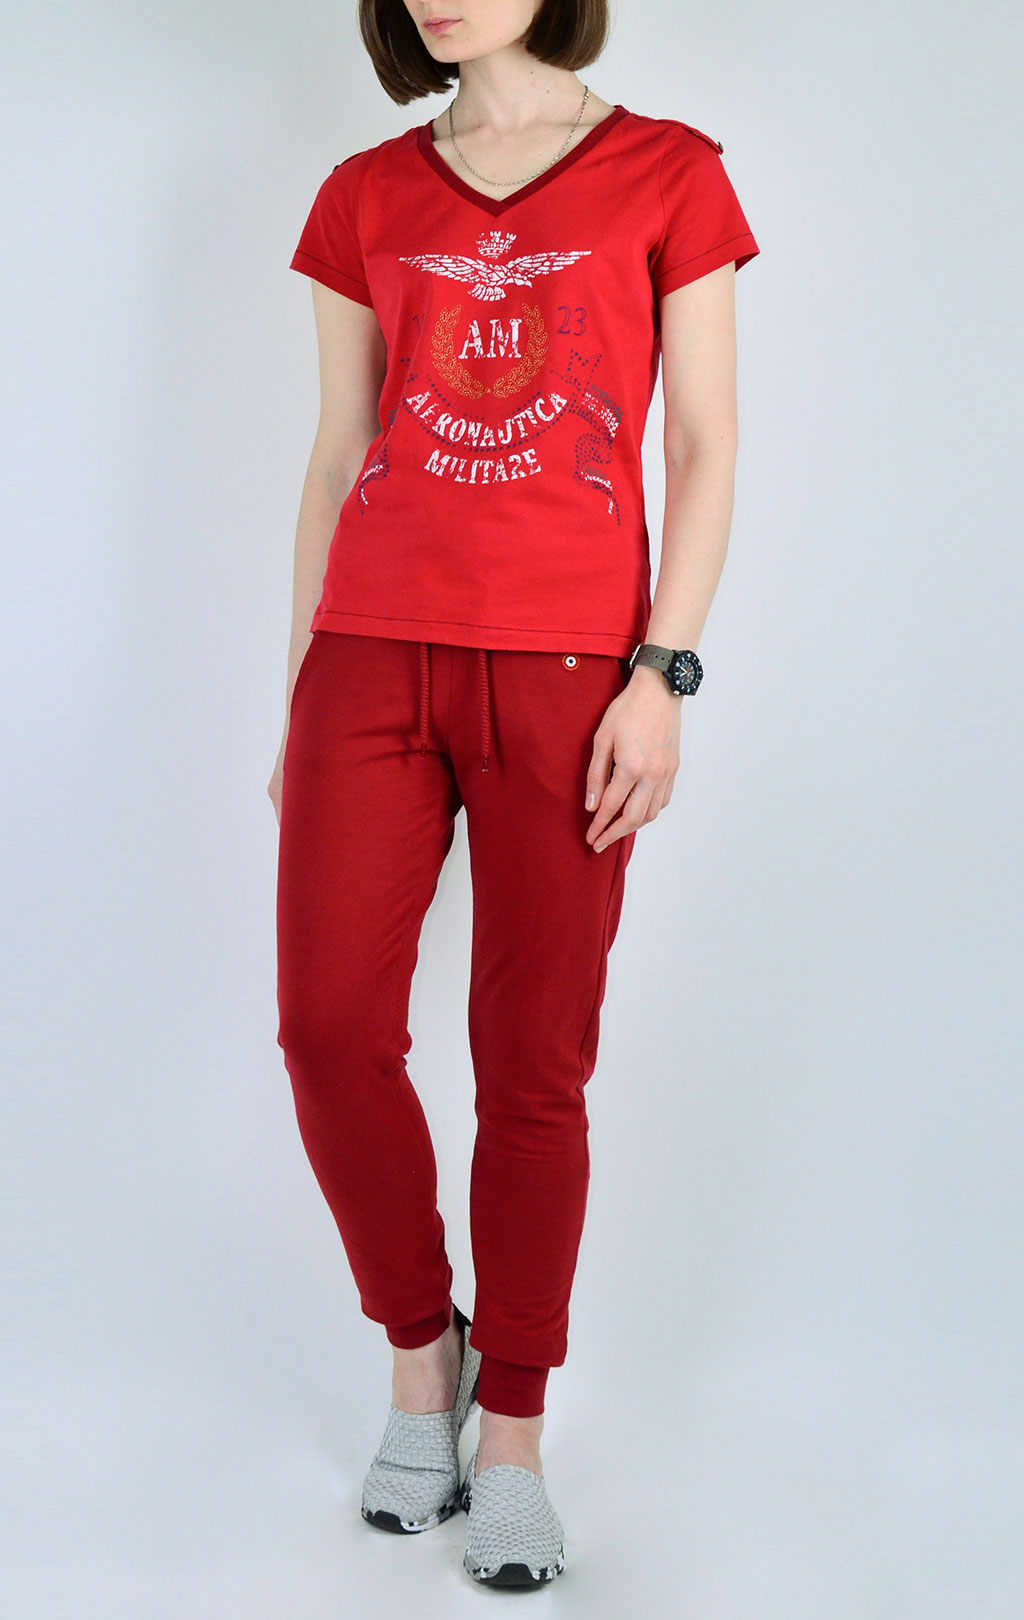 Женская футболка AERONAUTICA MILITARE red chili pepper (TS 1489) 